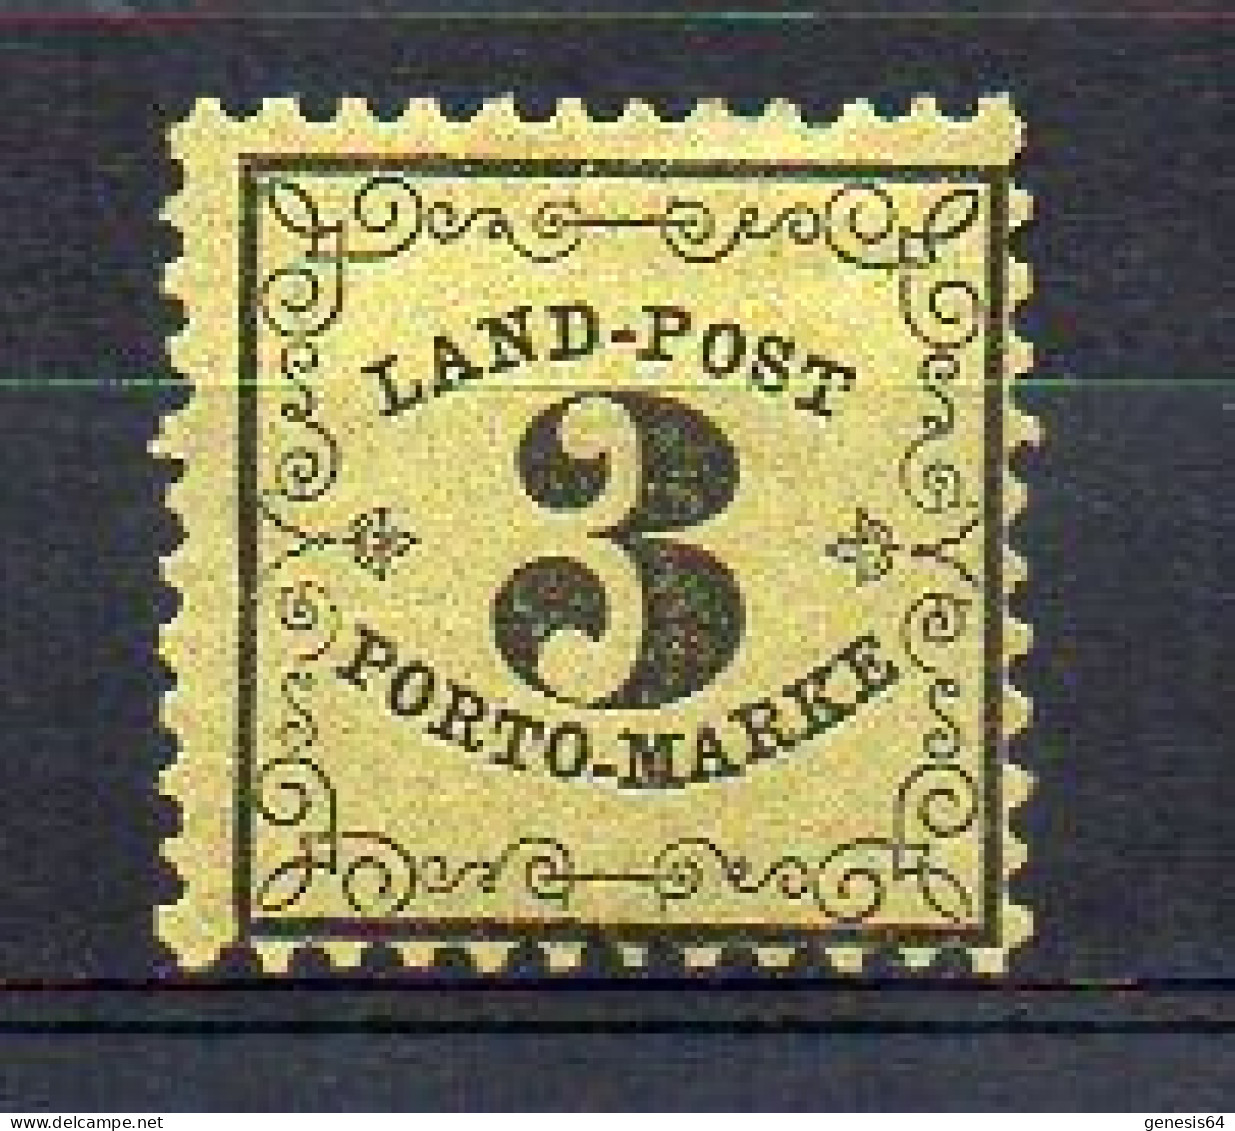 Baden 1862 - Portomarken Mi 2 - * - Mint Hinged (2ZK11) - Postfris